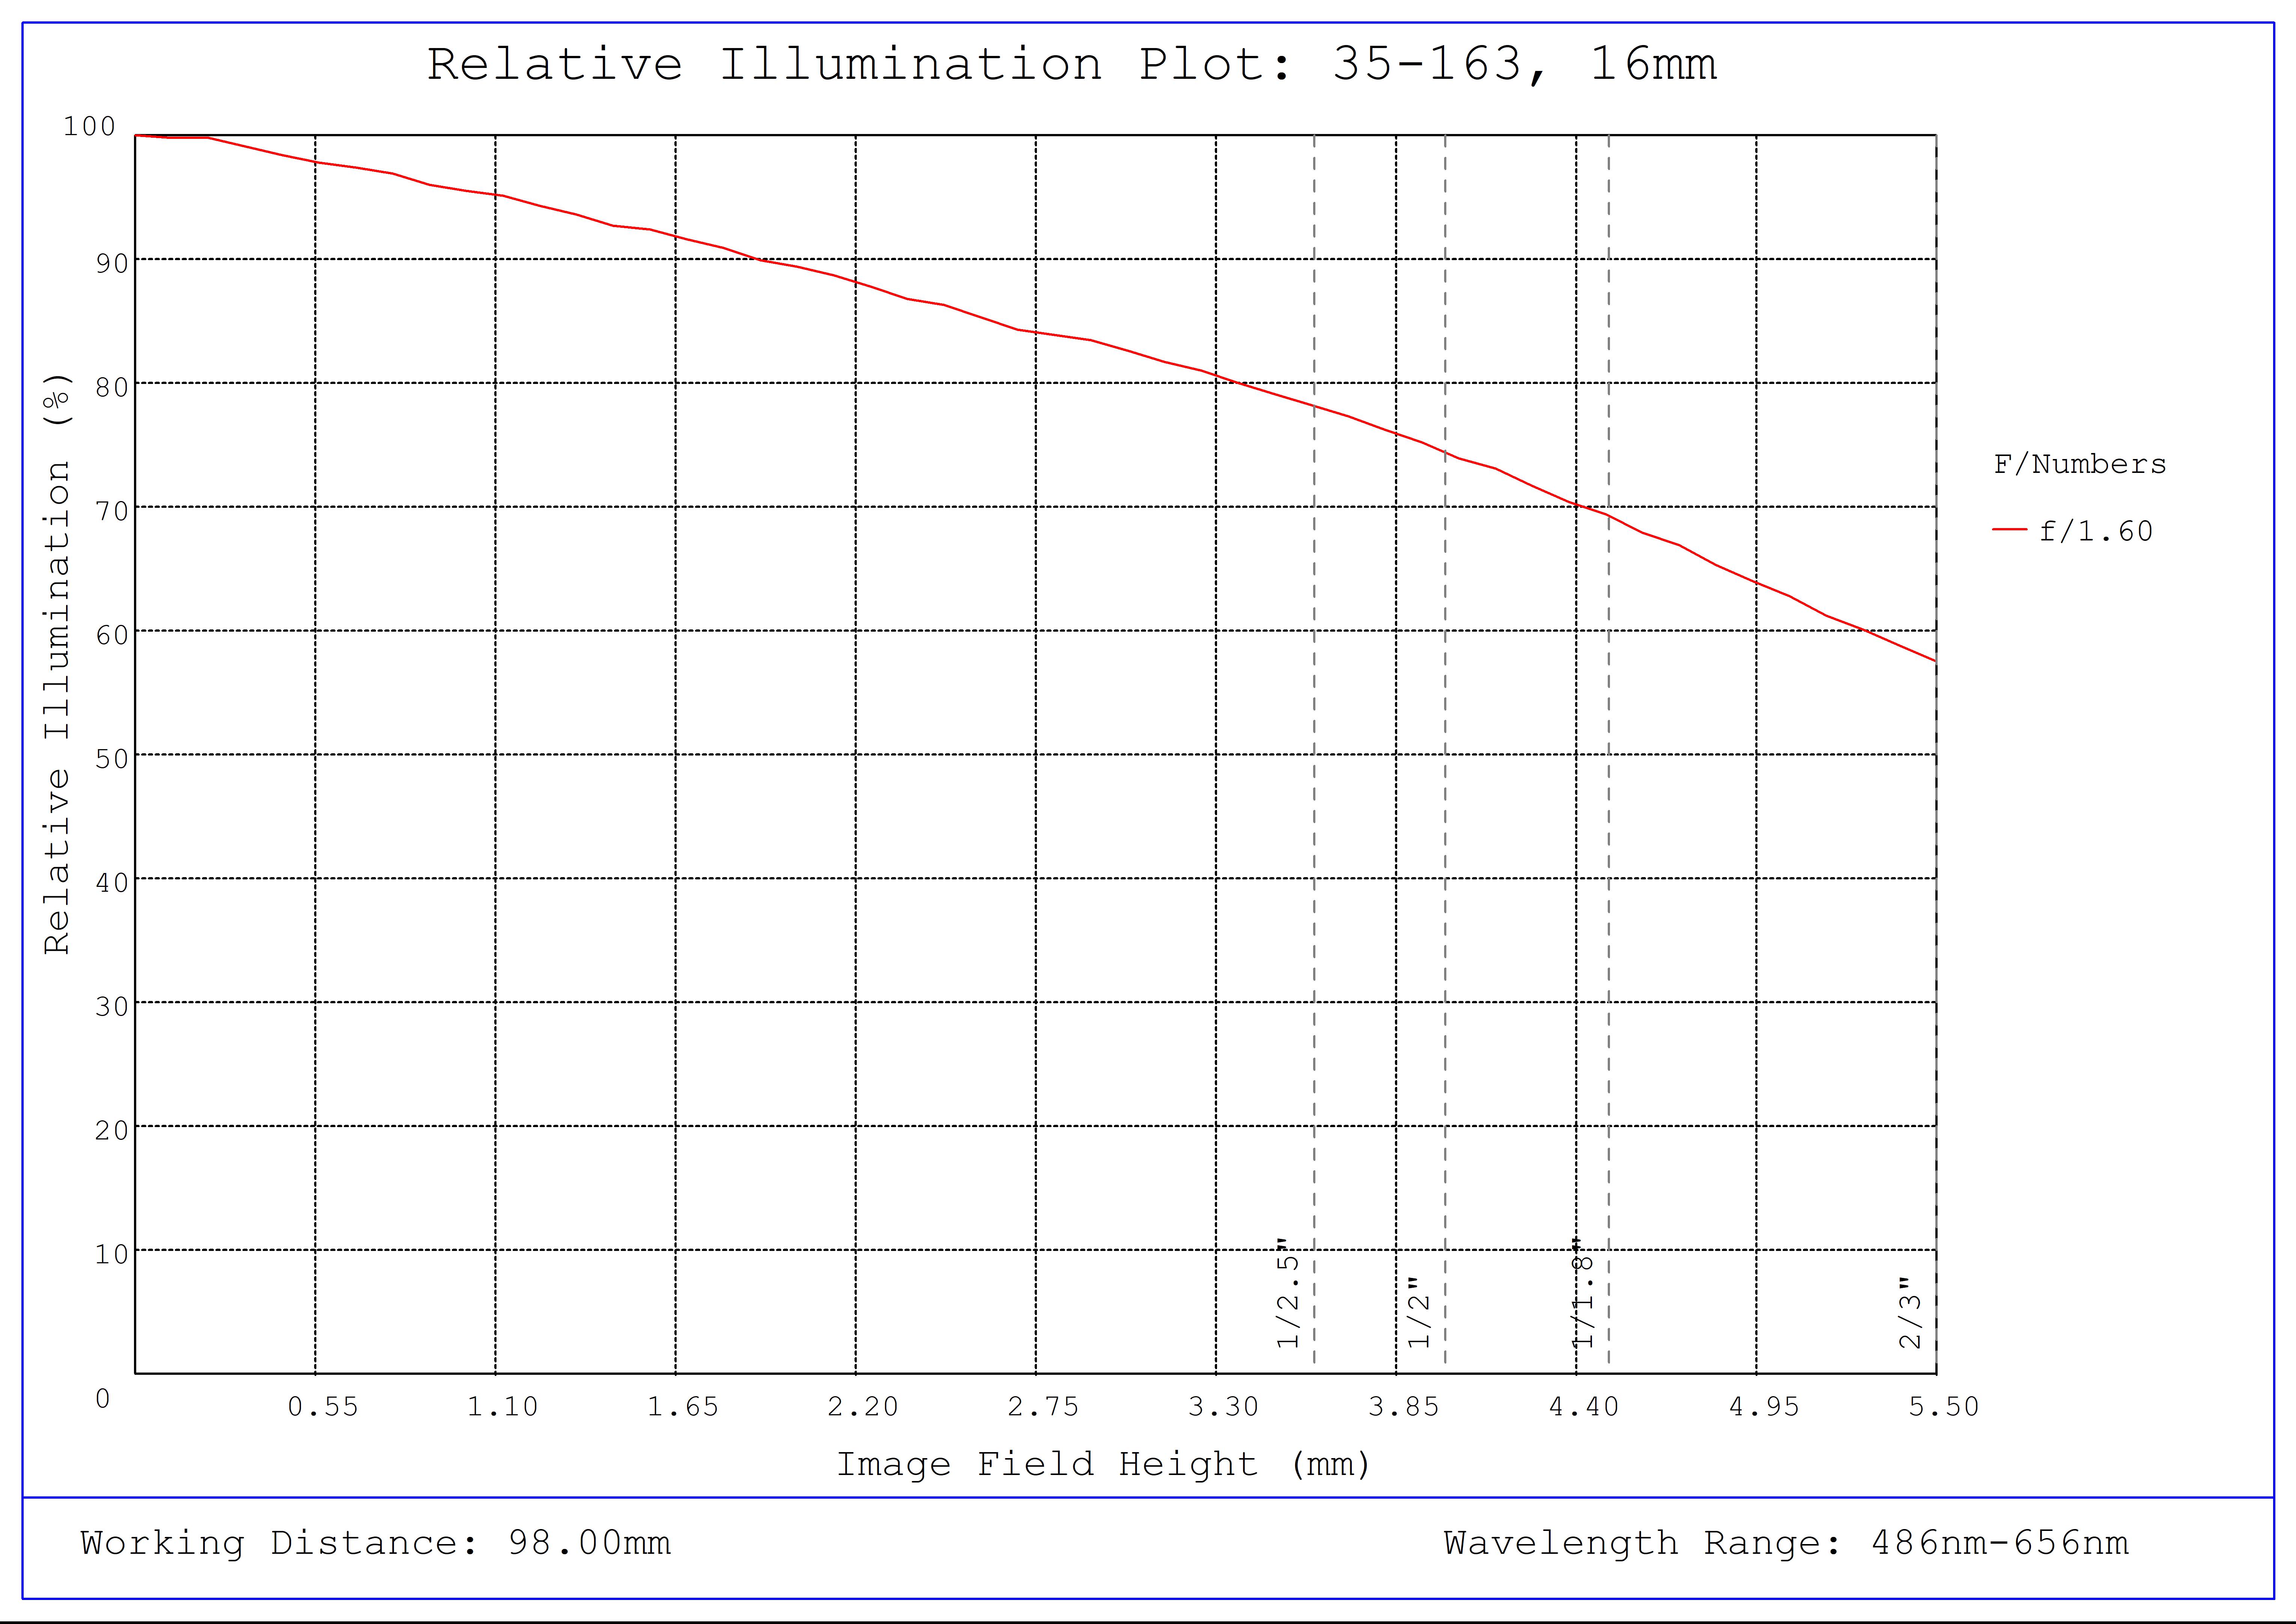 #35-163, 16mm, f/1.6 Cr Series Fixed Focal Length Lens, Relative Illumination Plot